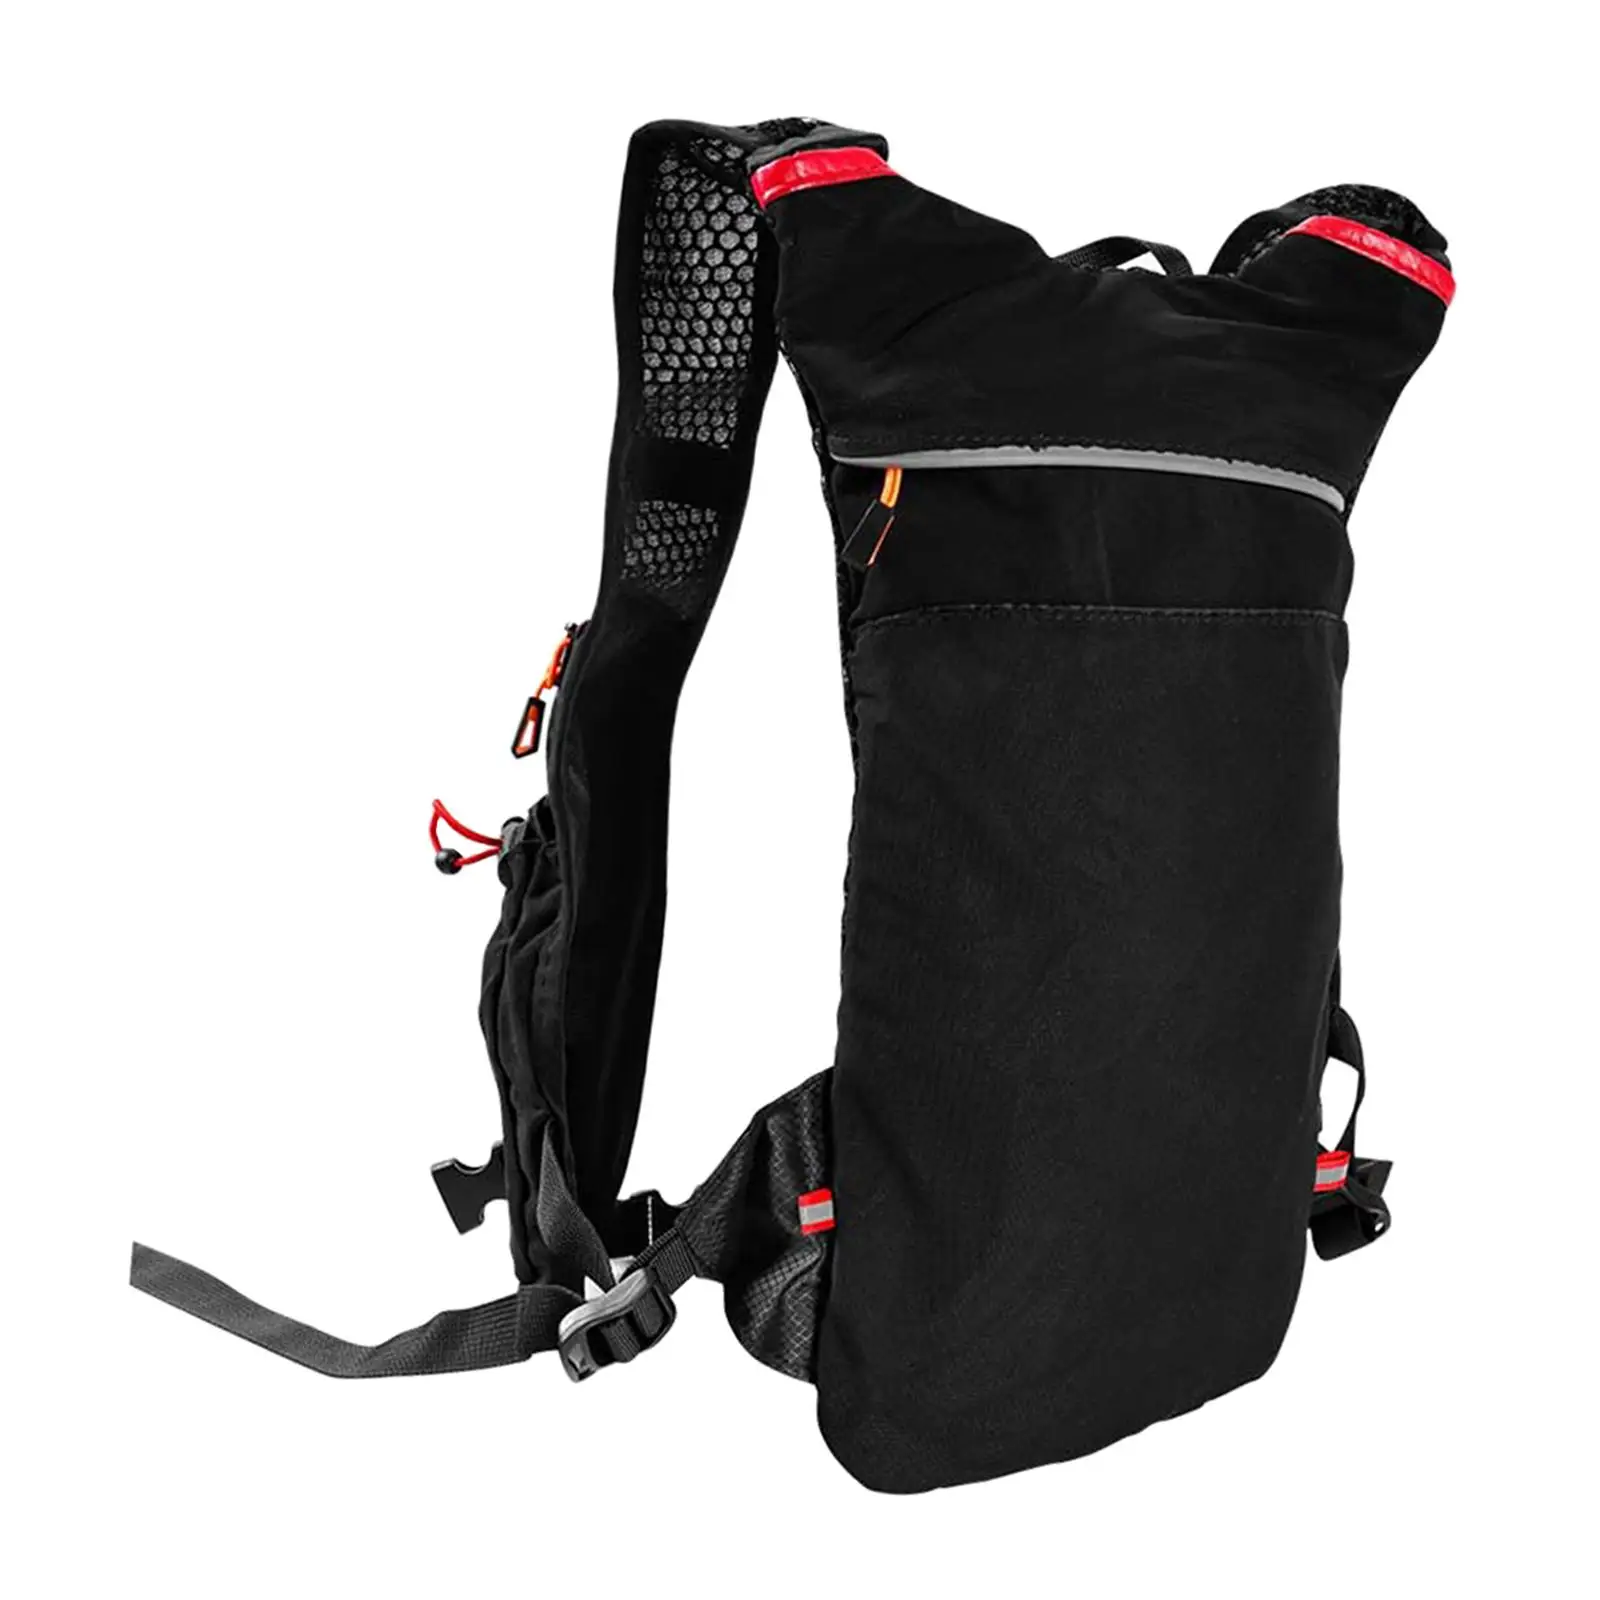 Hydration Backpack Practical Nylon Lightweight Adjustable Shoulder Straps Knapsack for Hiking Outdoor Riding Climbing Travel